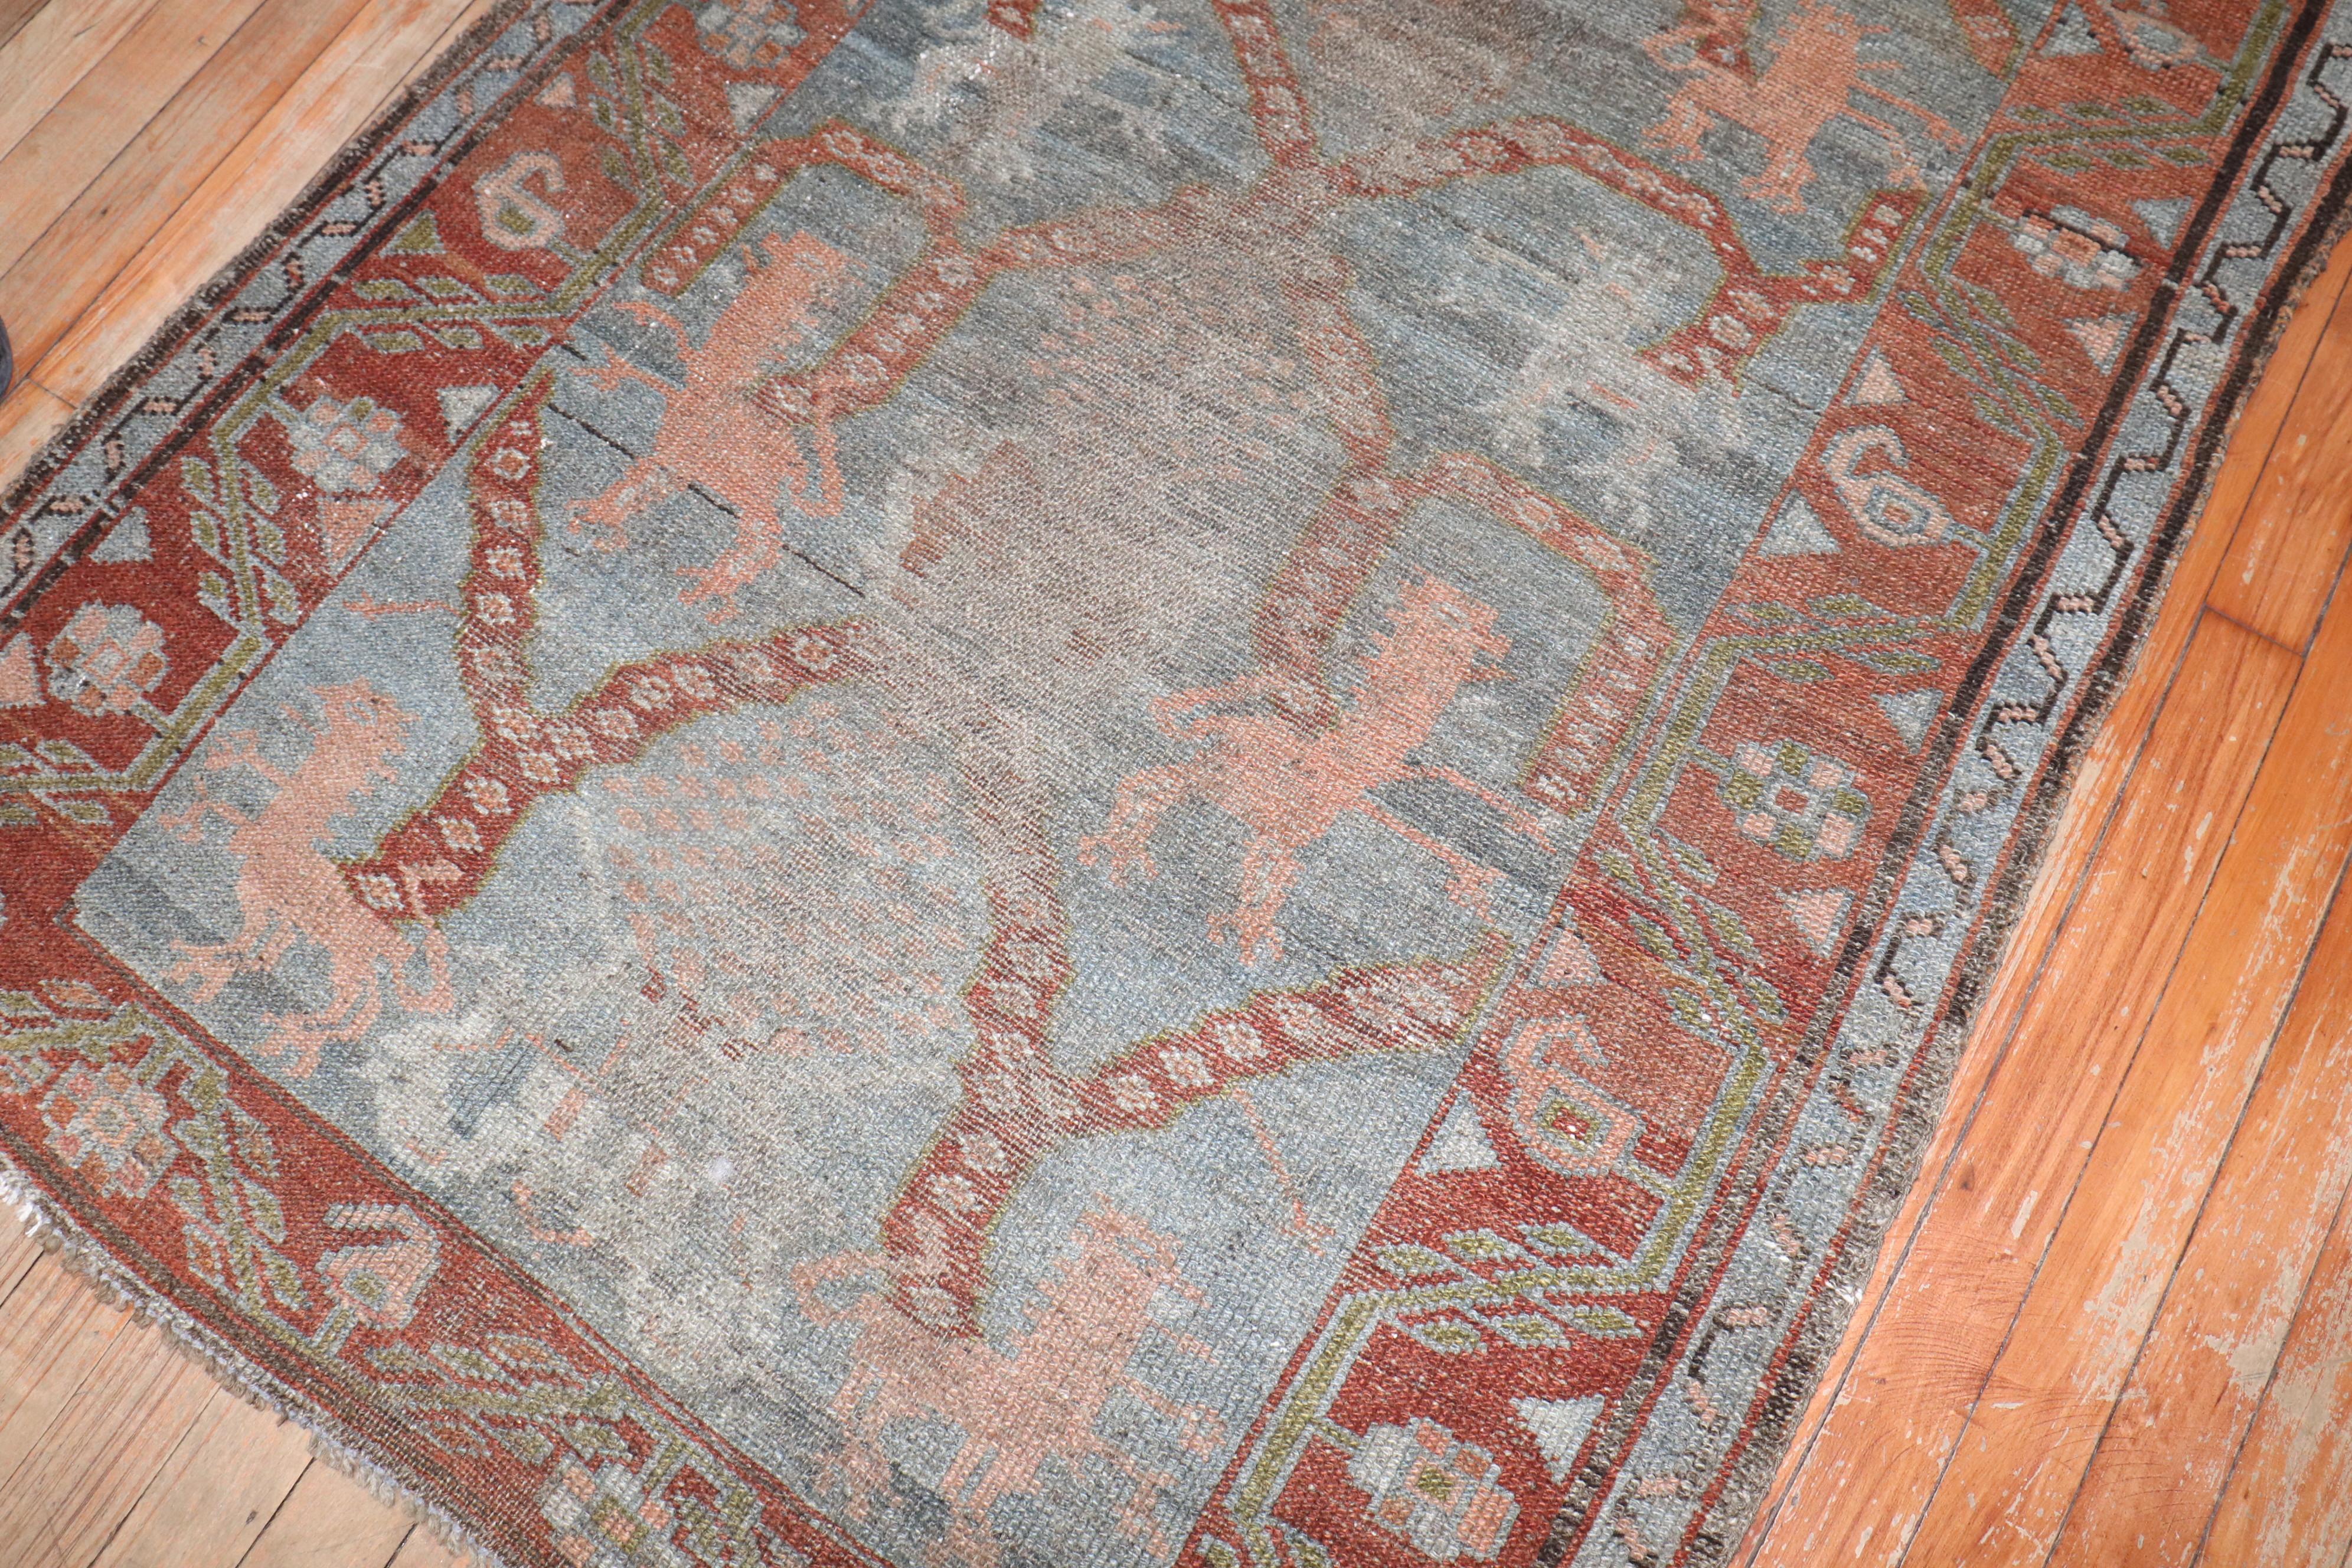 A late 19th century Kurd Persian Bidjar Rug with an animal lion rug pattern

Measures: 3'3